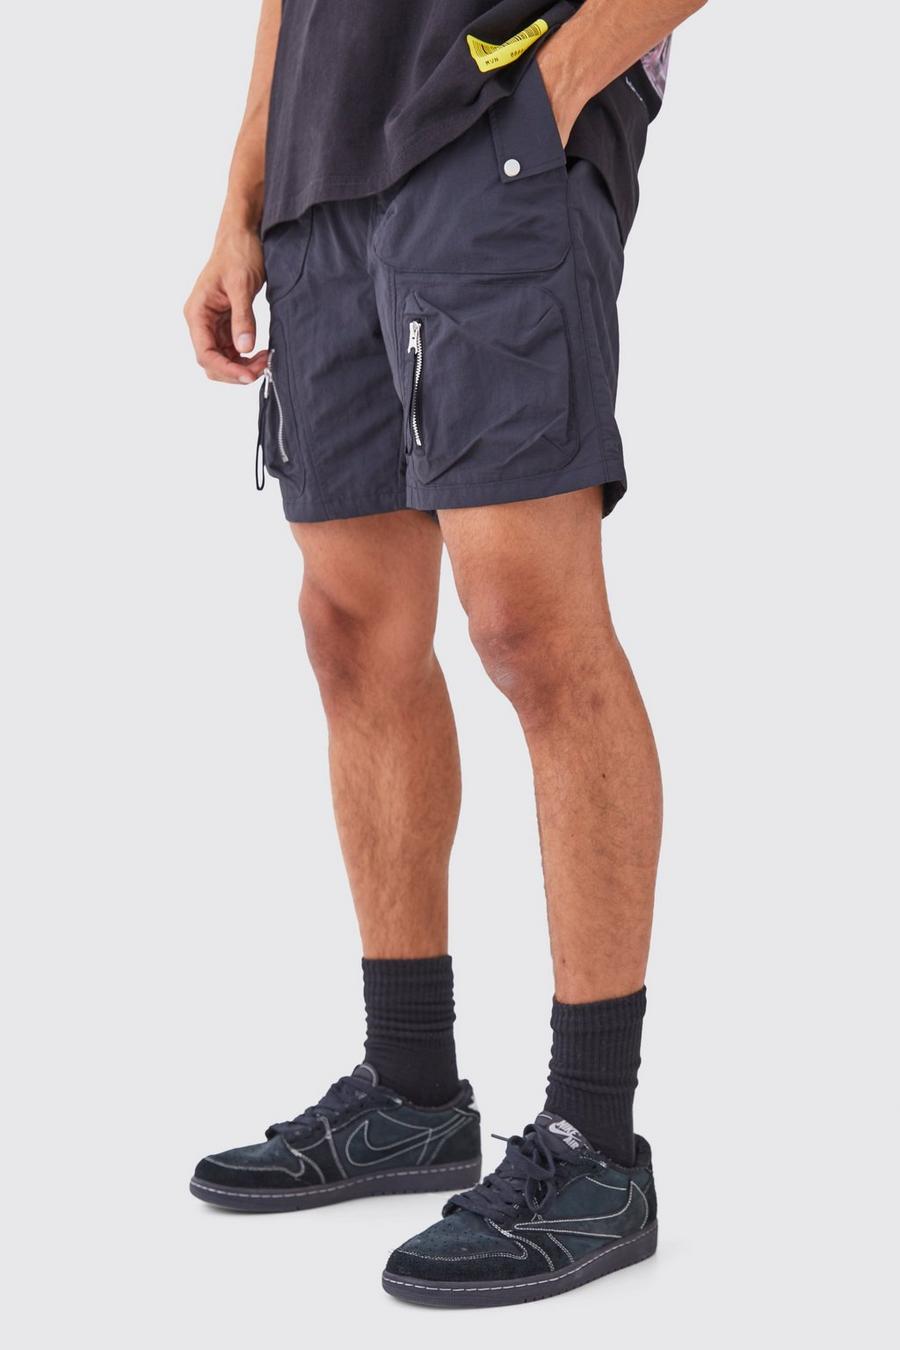 Chisel Elastic Waist Cargo Short, Khaki - Shorts